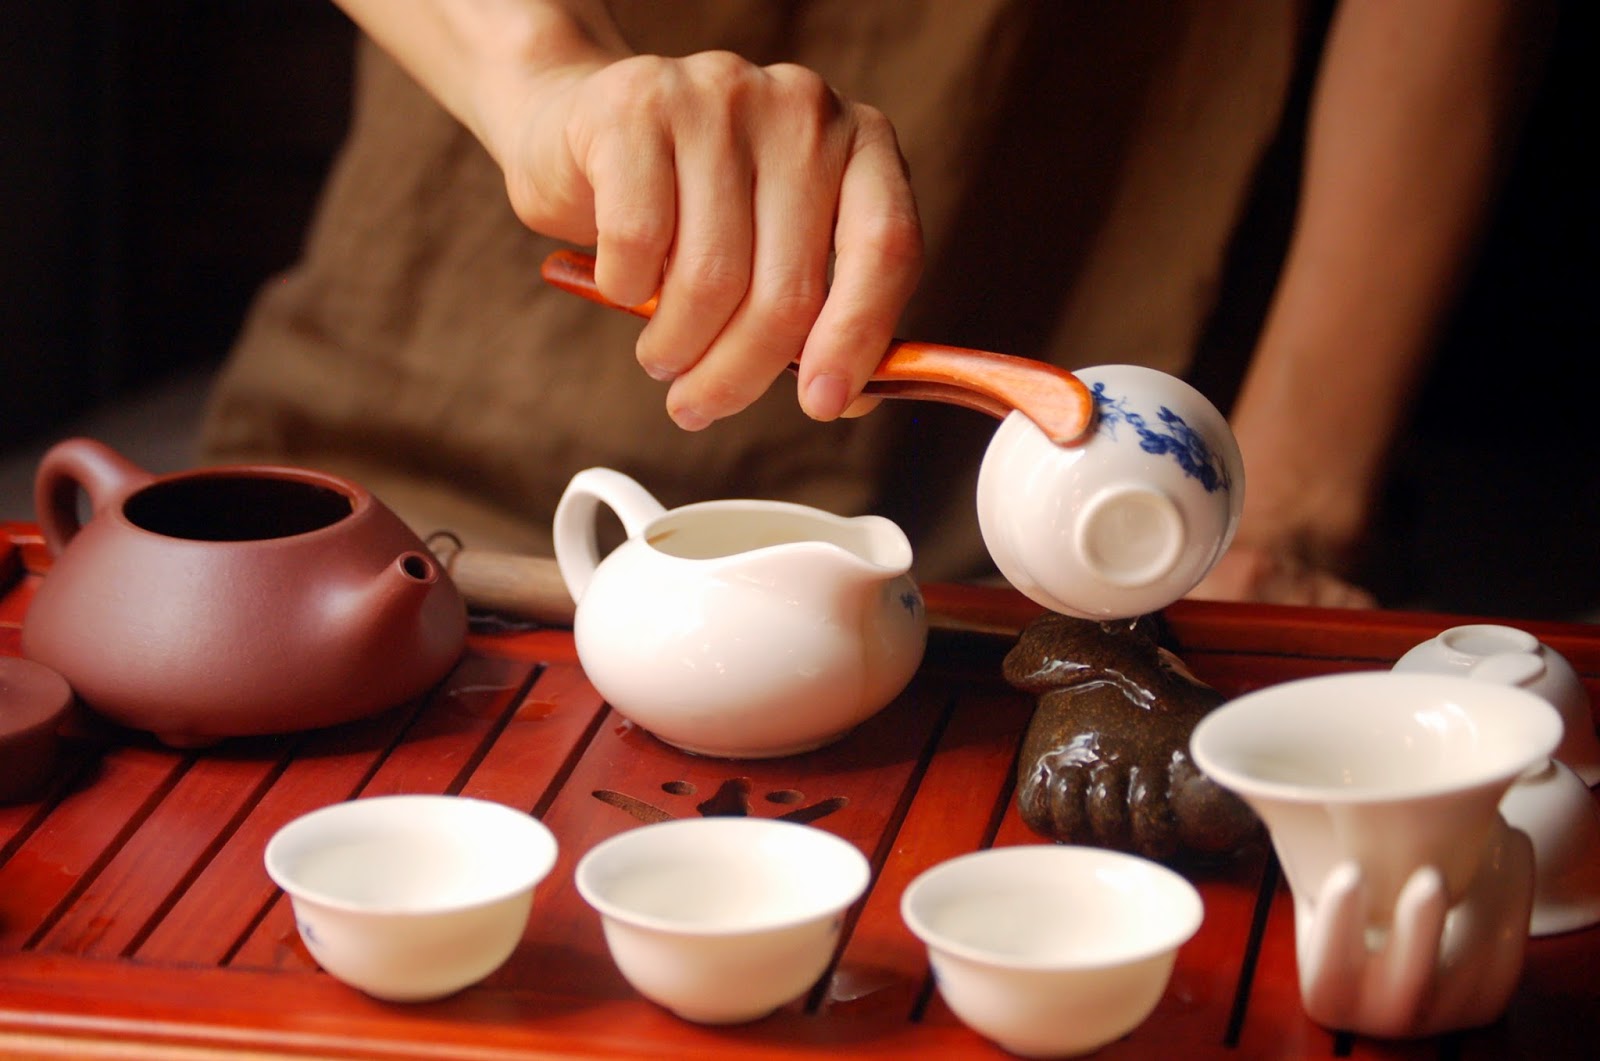 Seperti tradisi minum teh di Tiongkok dan Jepang, Nyaneut juga punya tata cara minum teh tersendiri